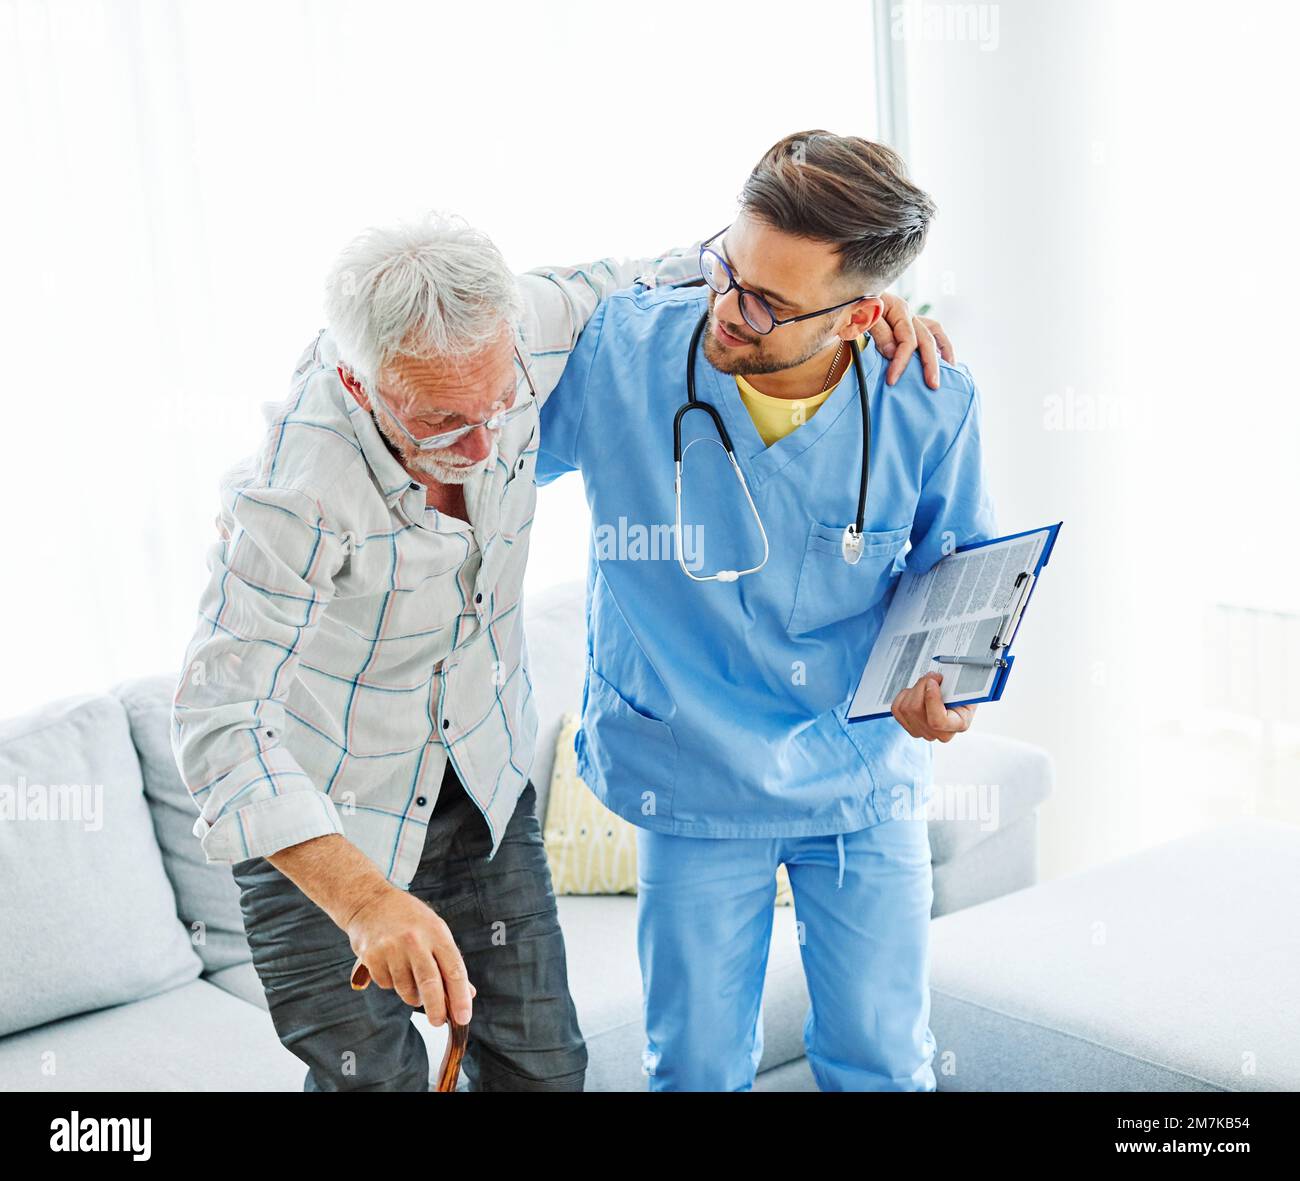 nurse doctor senior care caregiver help assistence retirement home nursing helping holding hug elderly man woman health support walking cane stick Stock Photo